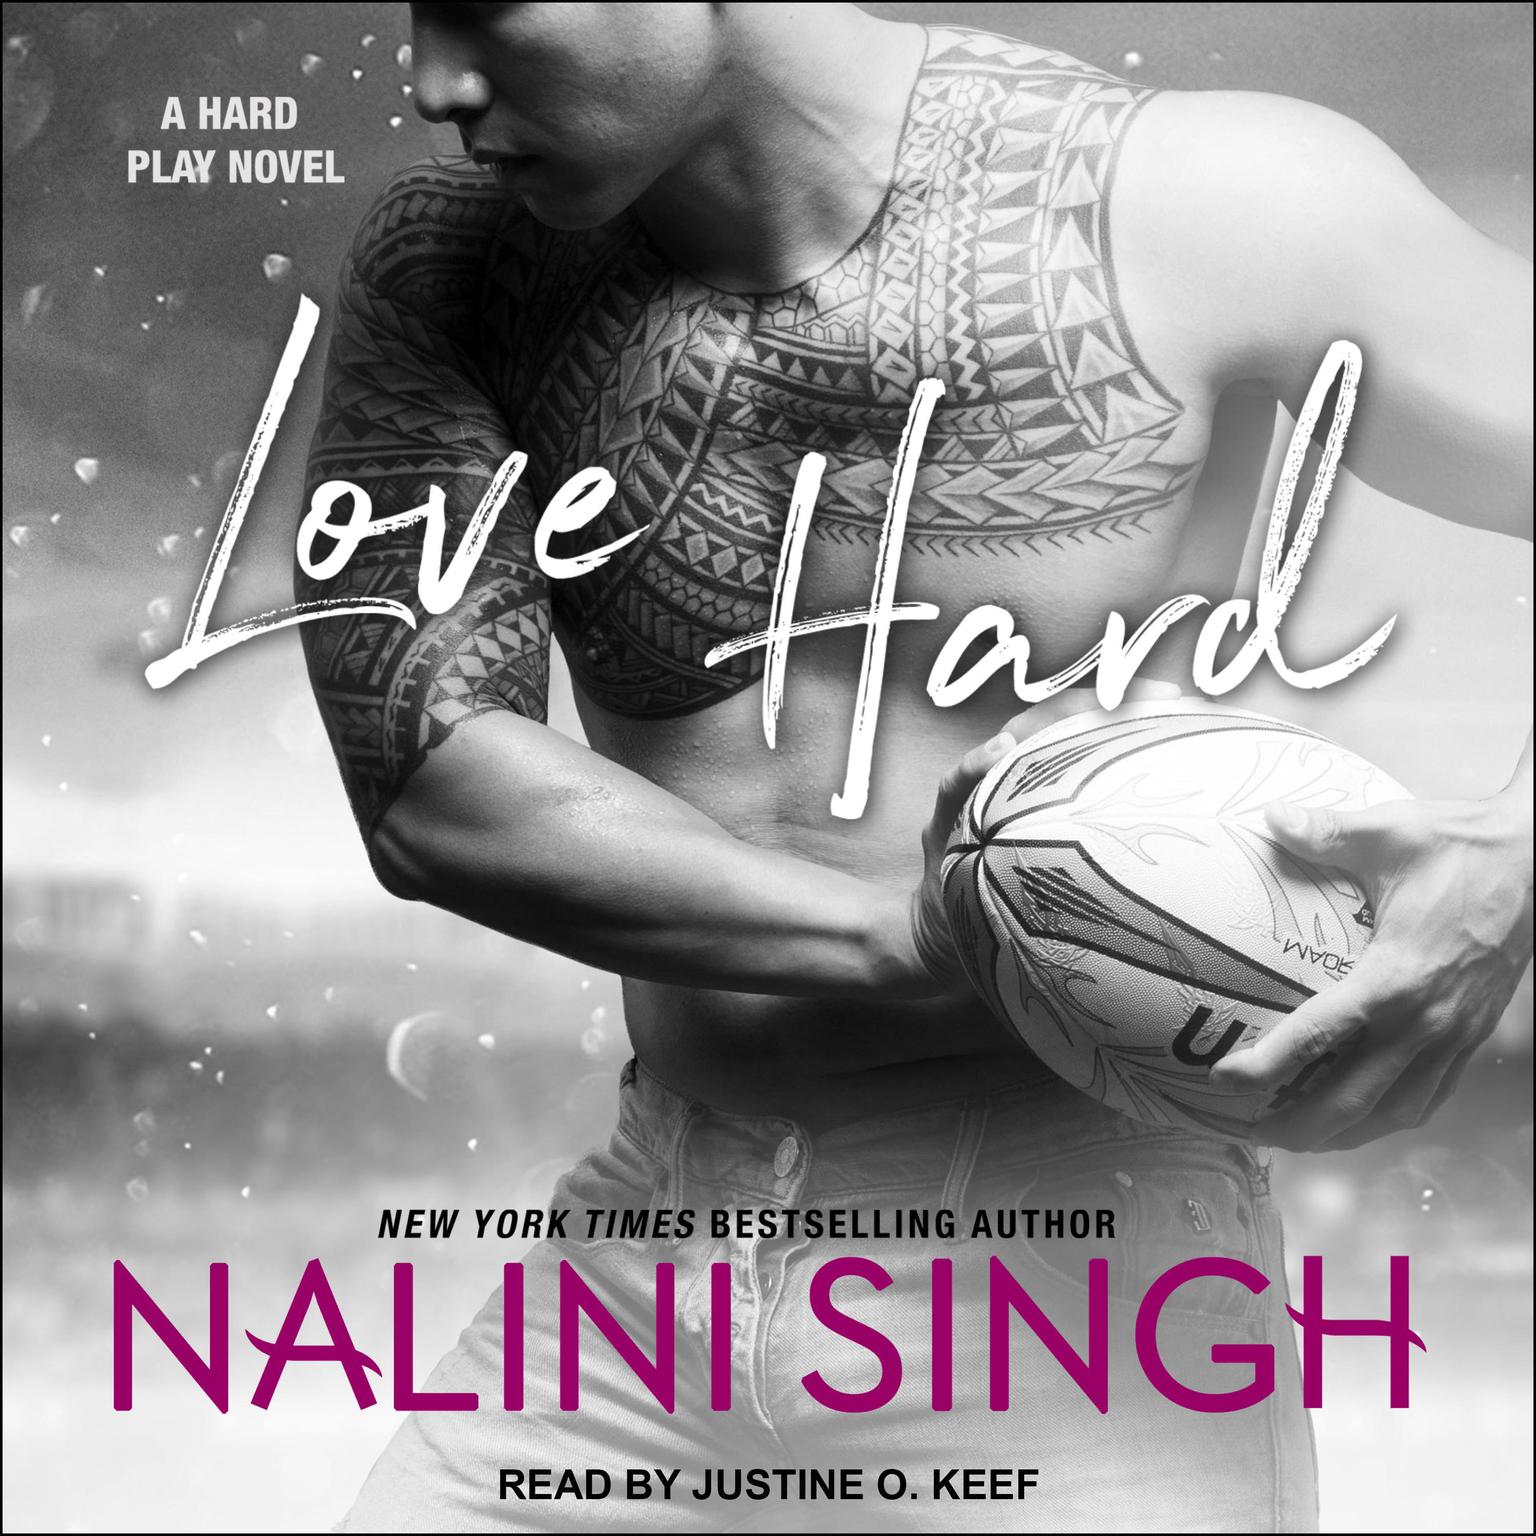 Love Hard Audiobook, by Nalini Singh